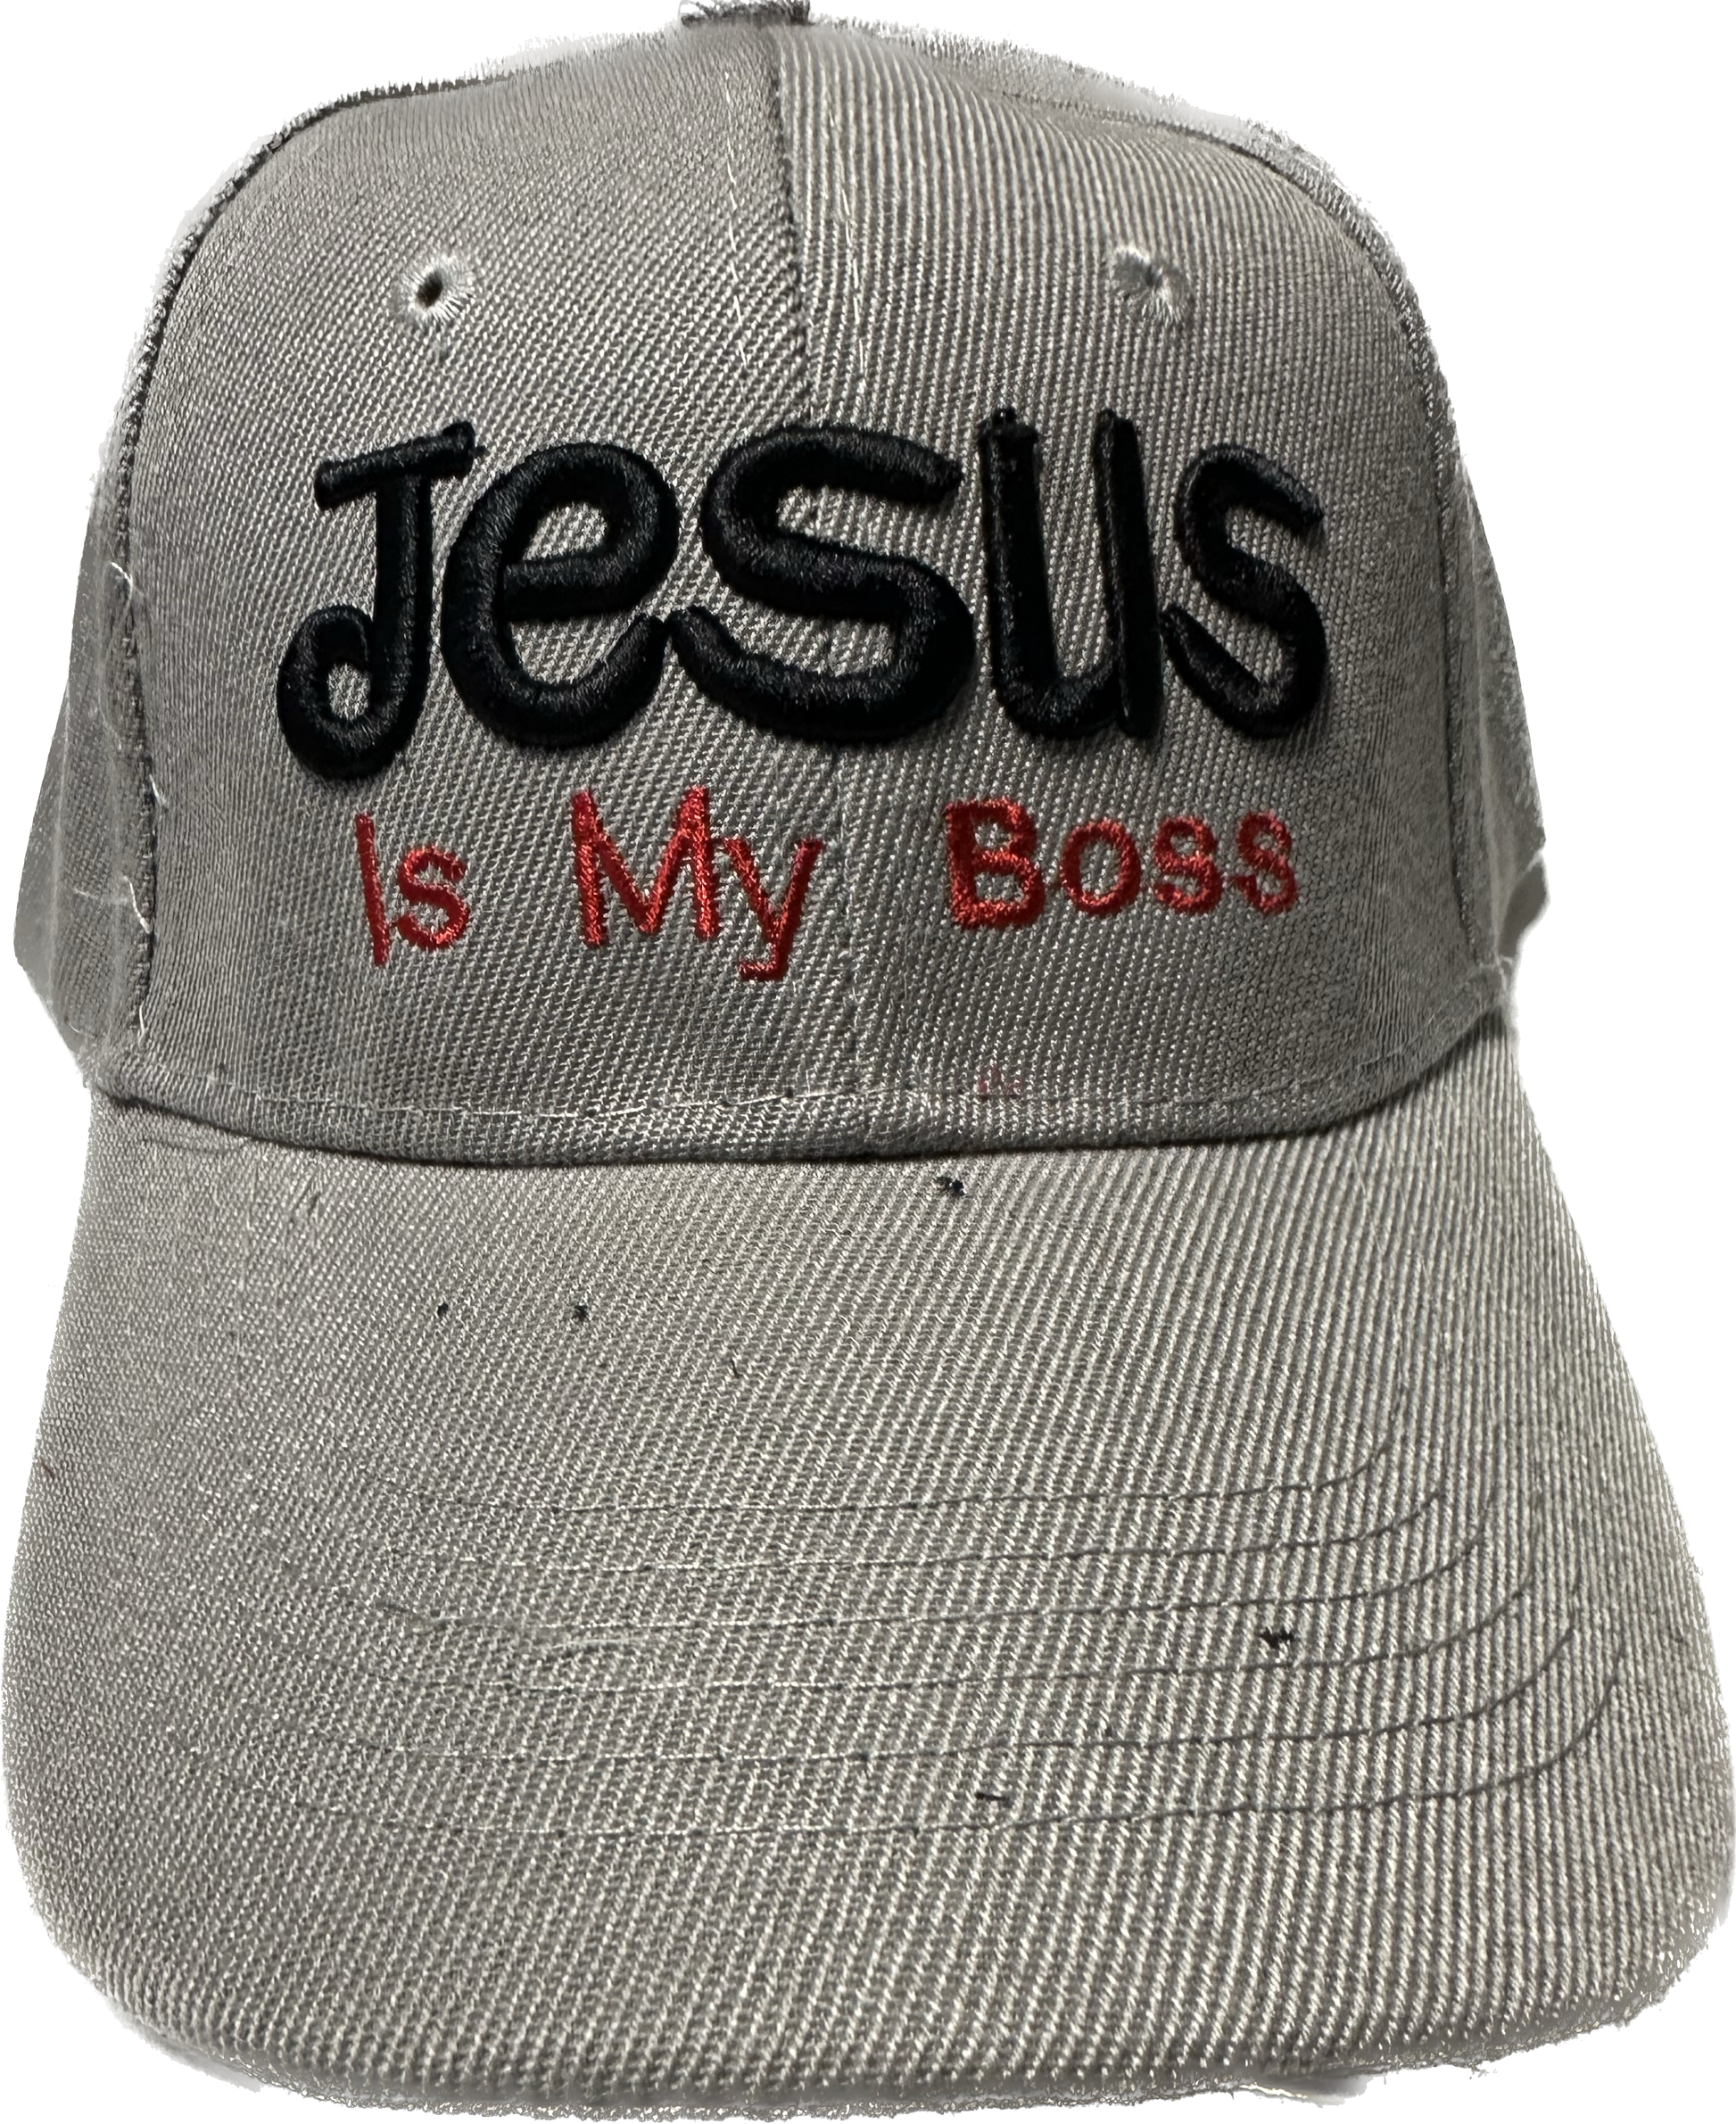 Sombrero Tan Jesús es mi jefe